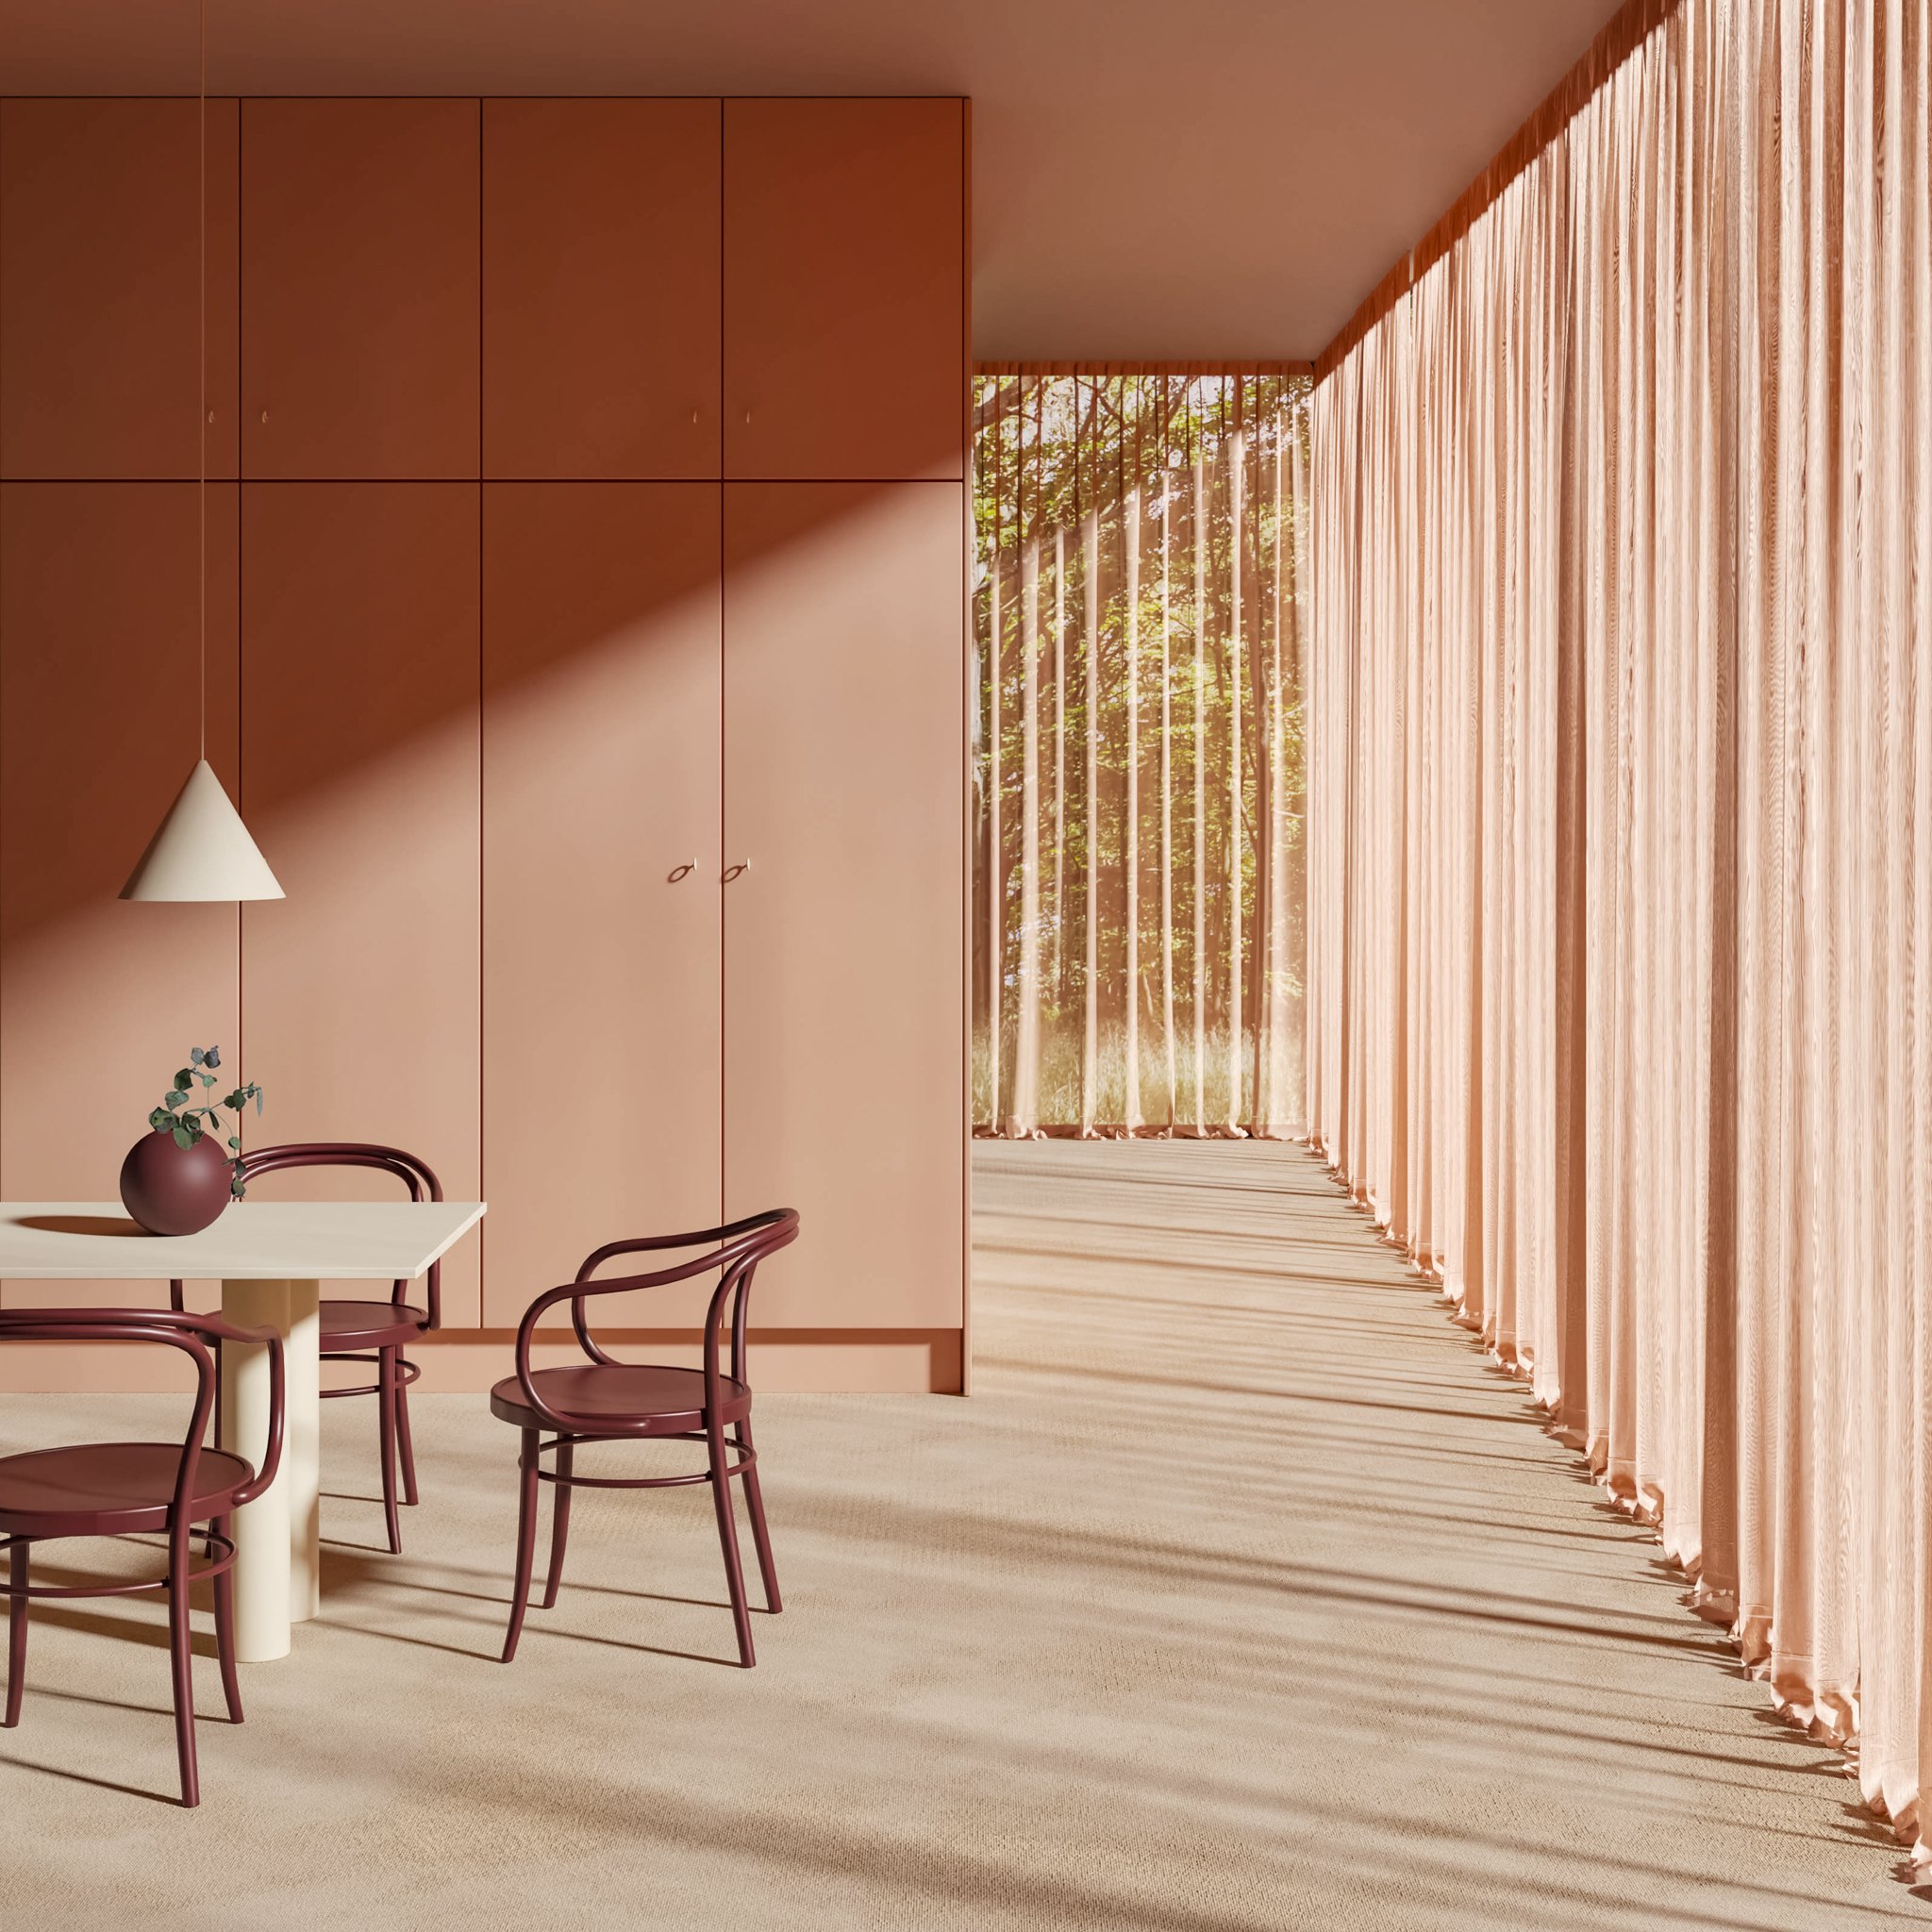 toniton-carpet-table-chairs-pendant-paint-peach.jpg